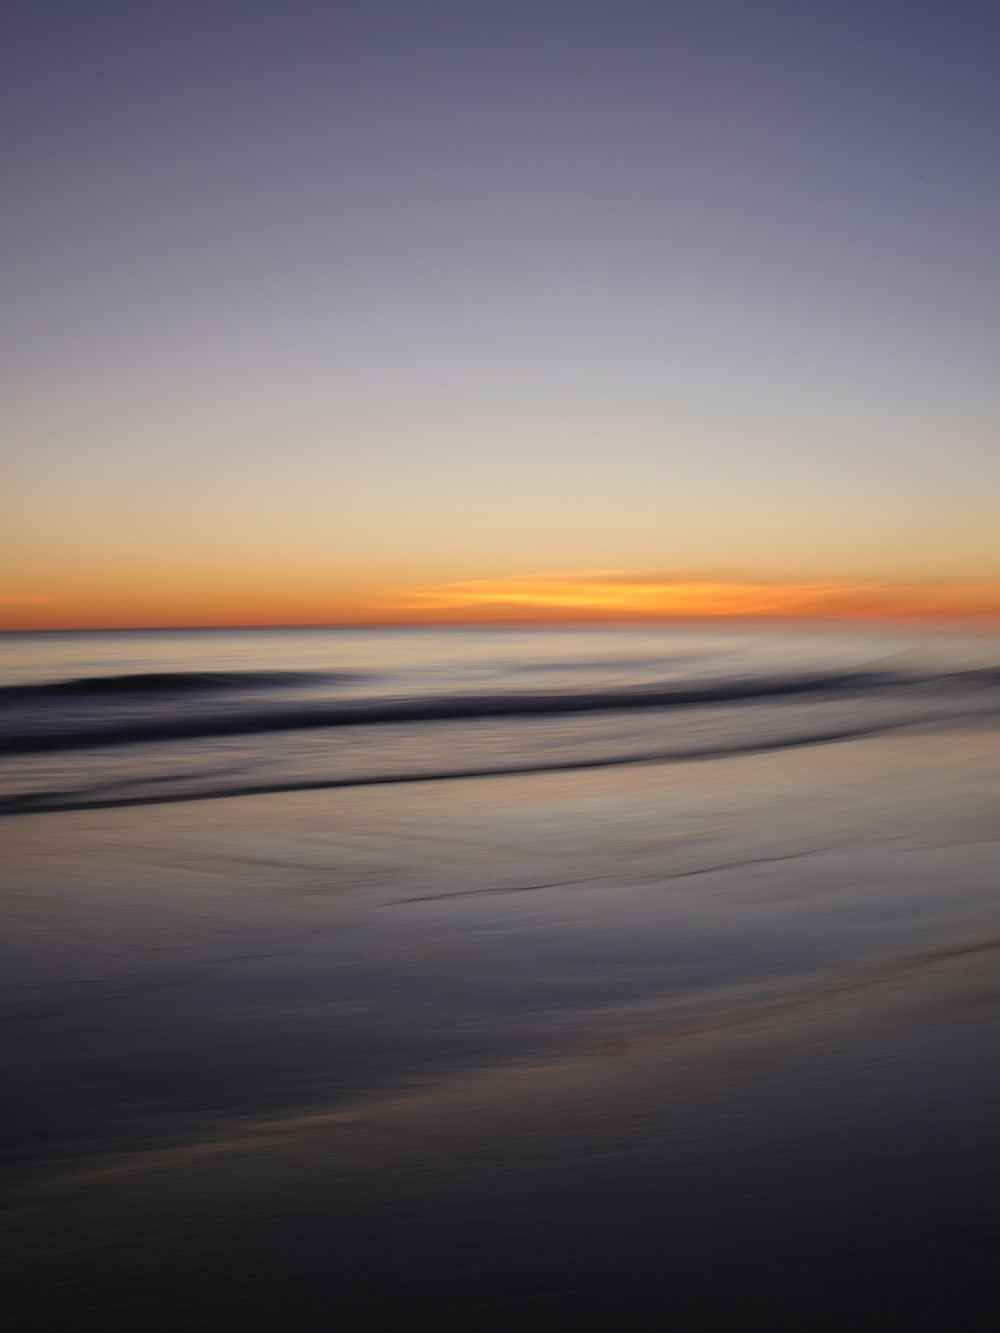 a blurry photo of a beach at sunset